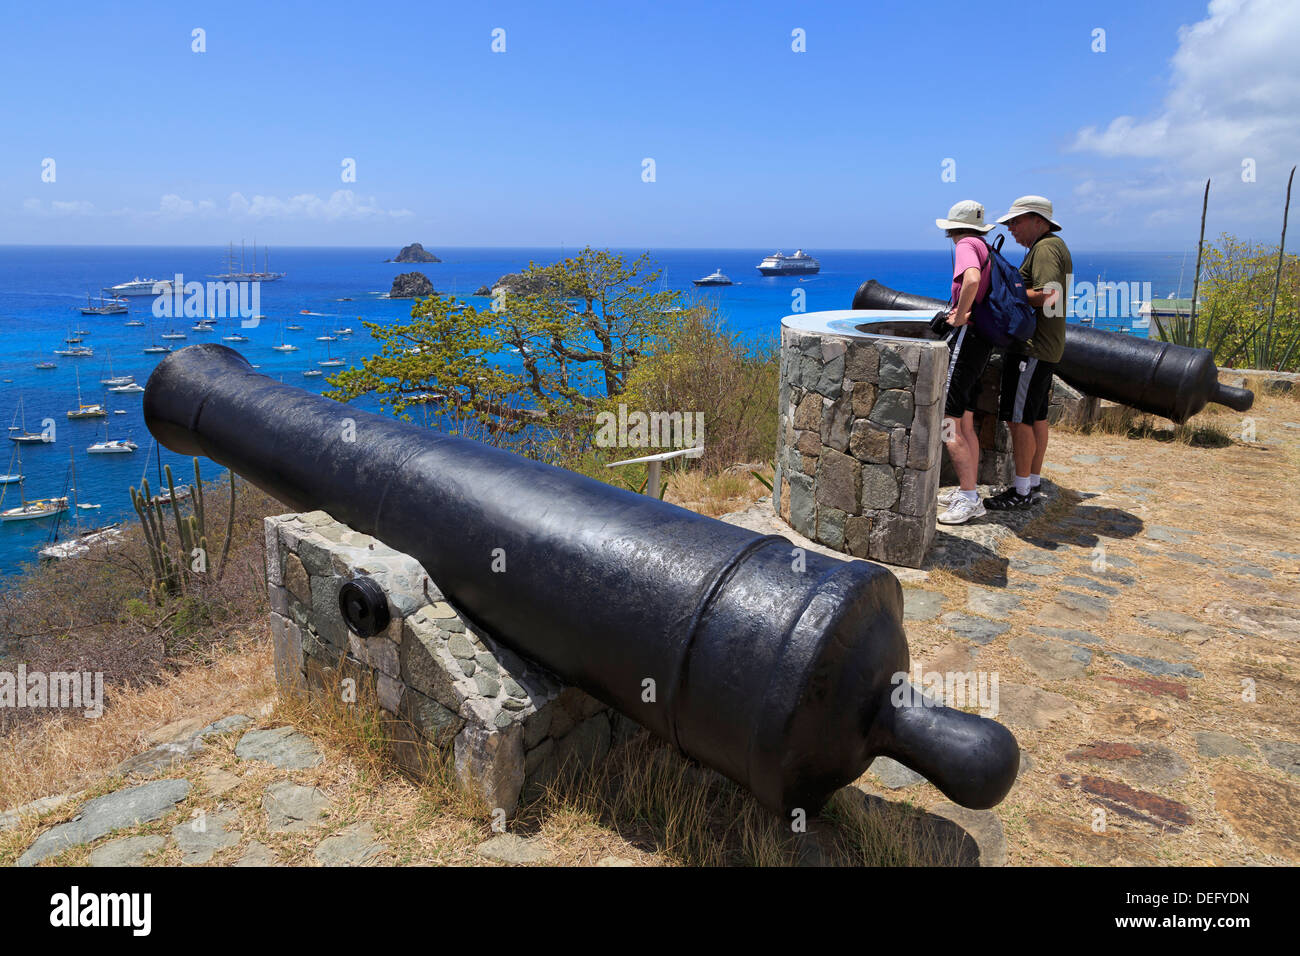 Cannon En Gustavia, Saint Barthelemy (St. Barts), Islas de Sotavento, Antillas, Caribe, América Central Foto de stock